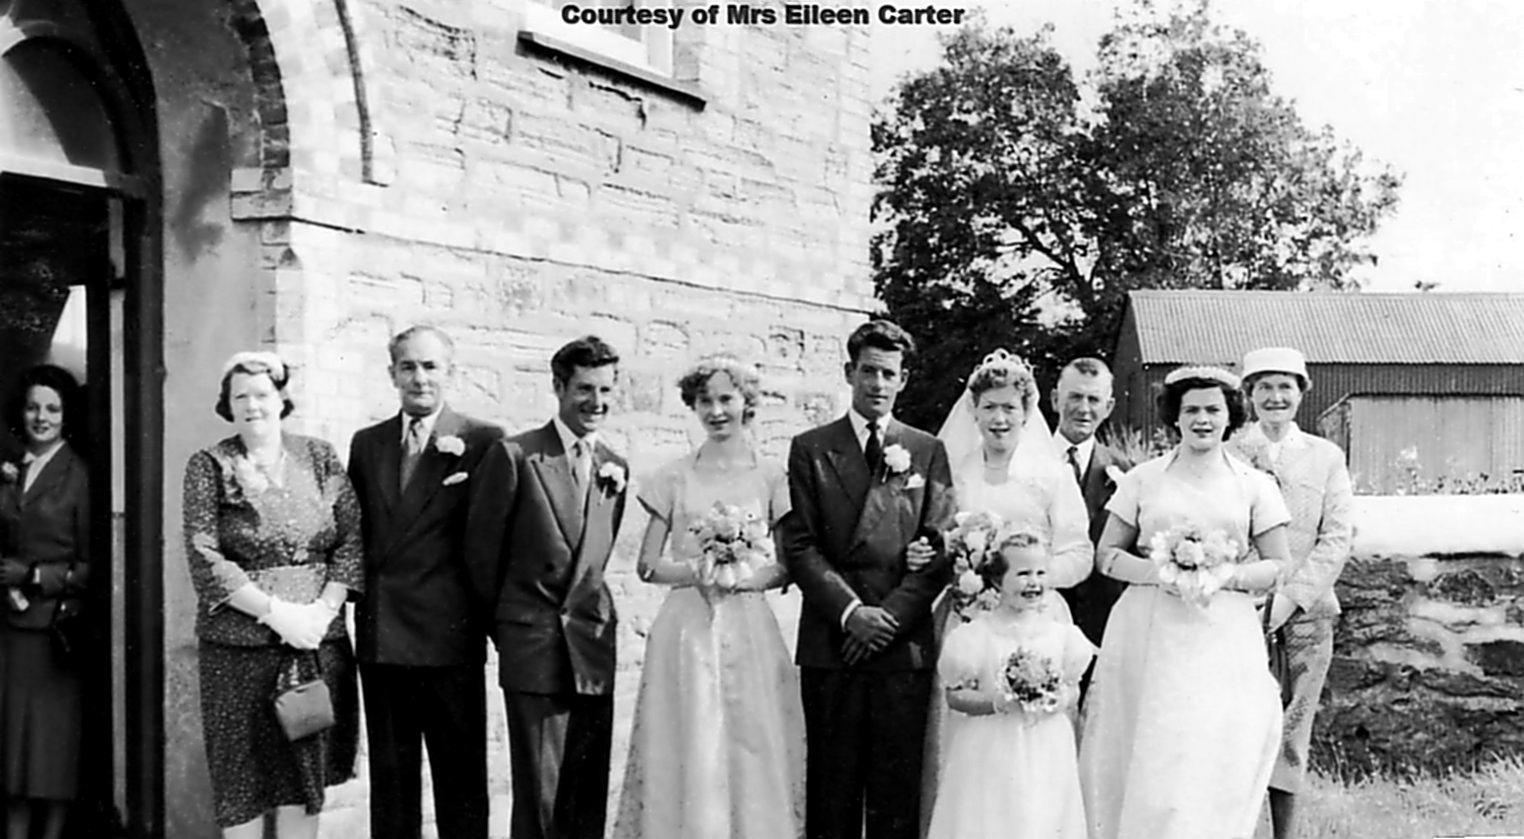 Tony Carter & Margaret Buddell Wedding 1956